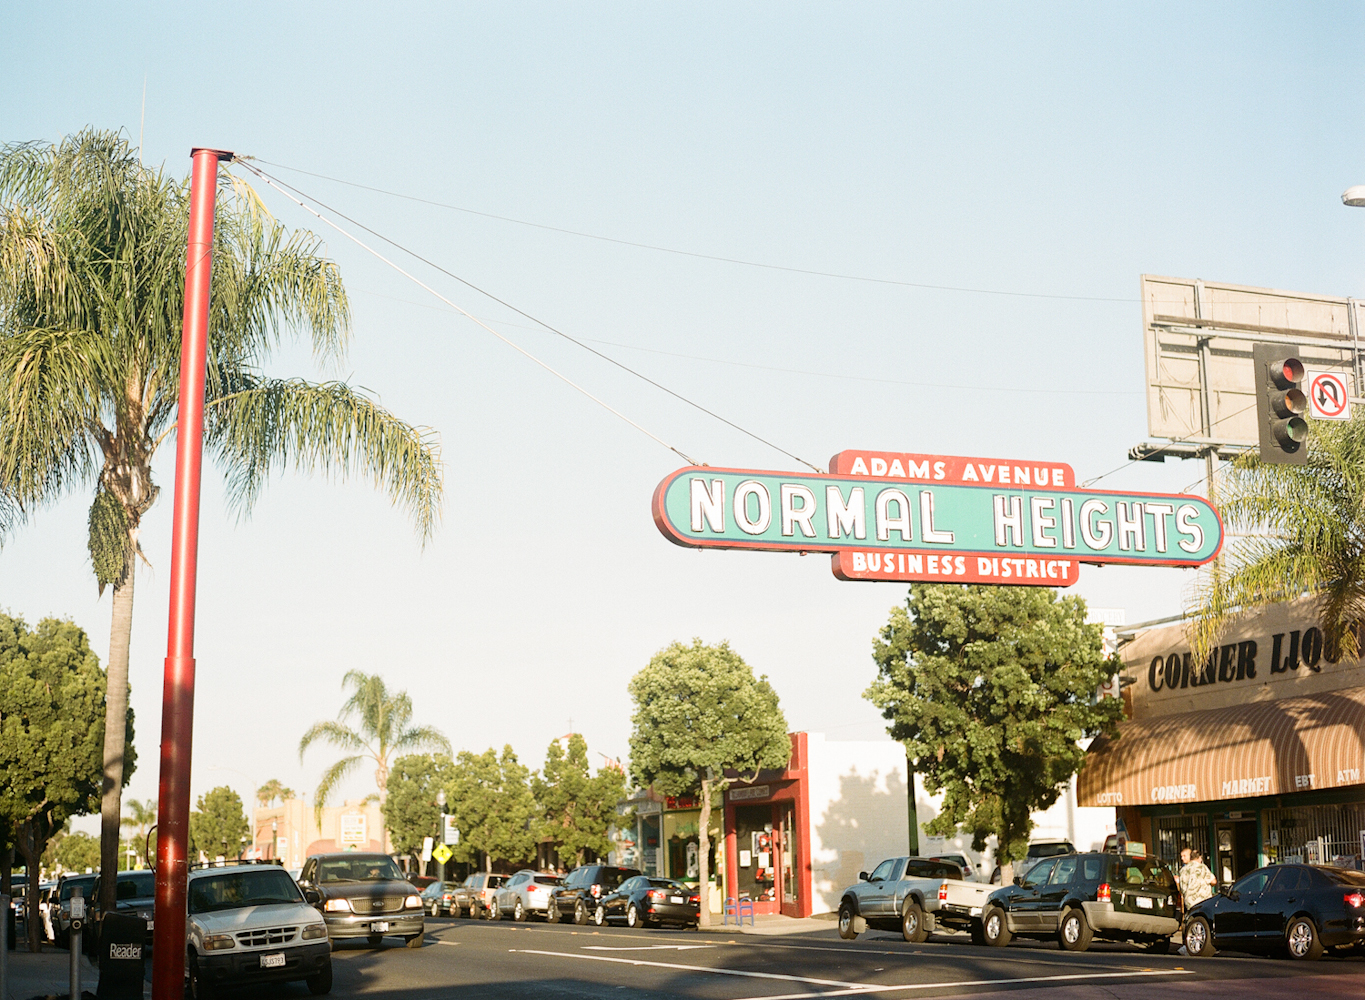 Normal Heights Neighborhood of San Diego